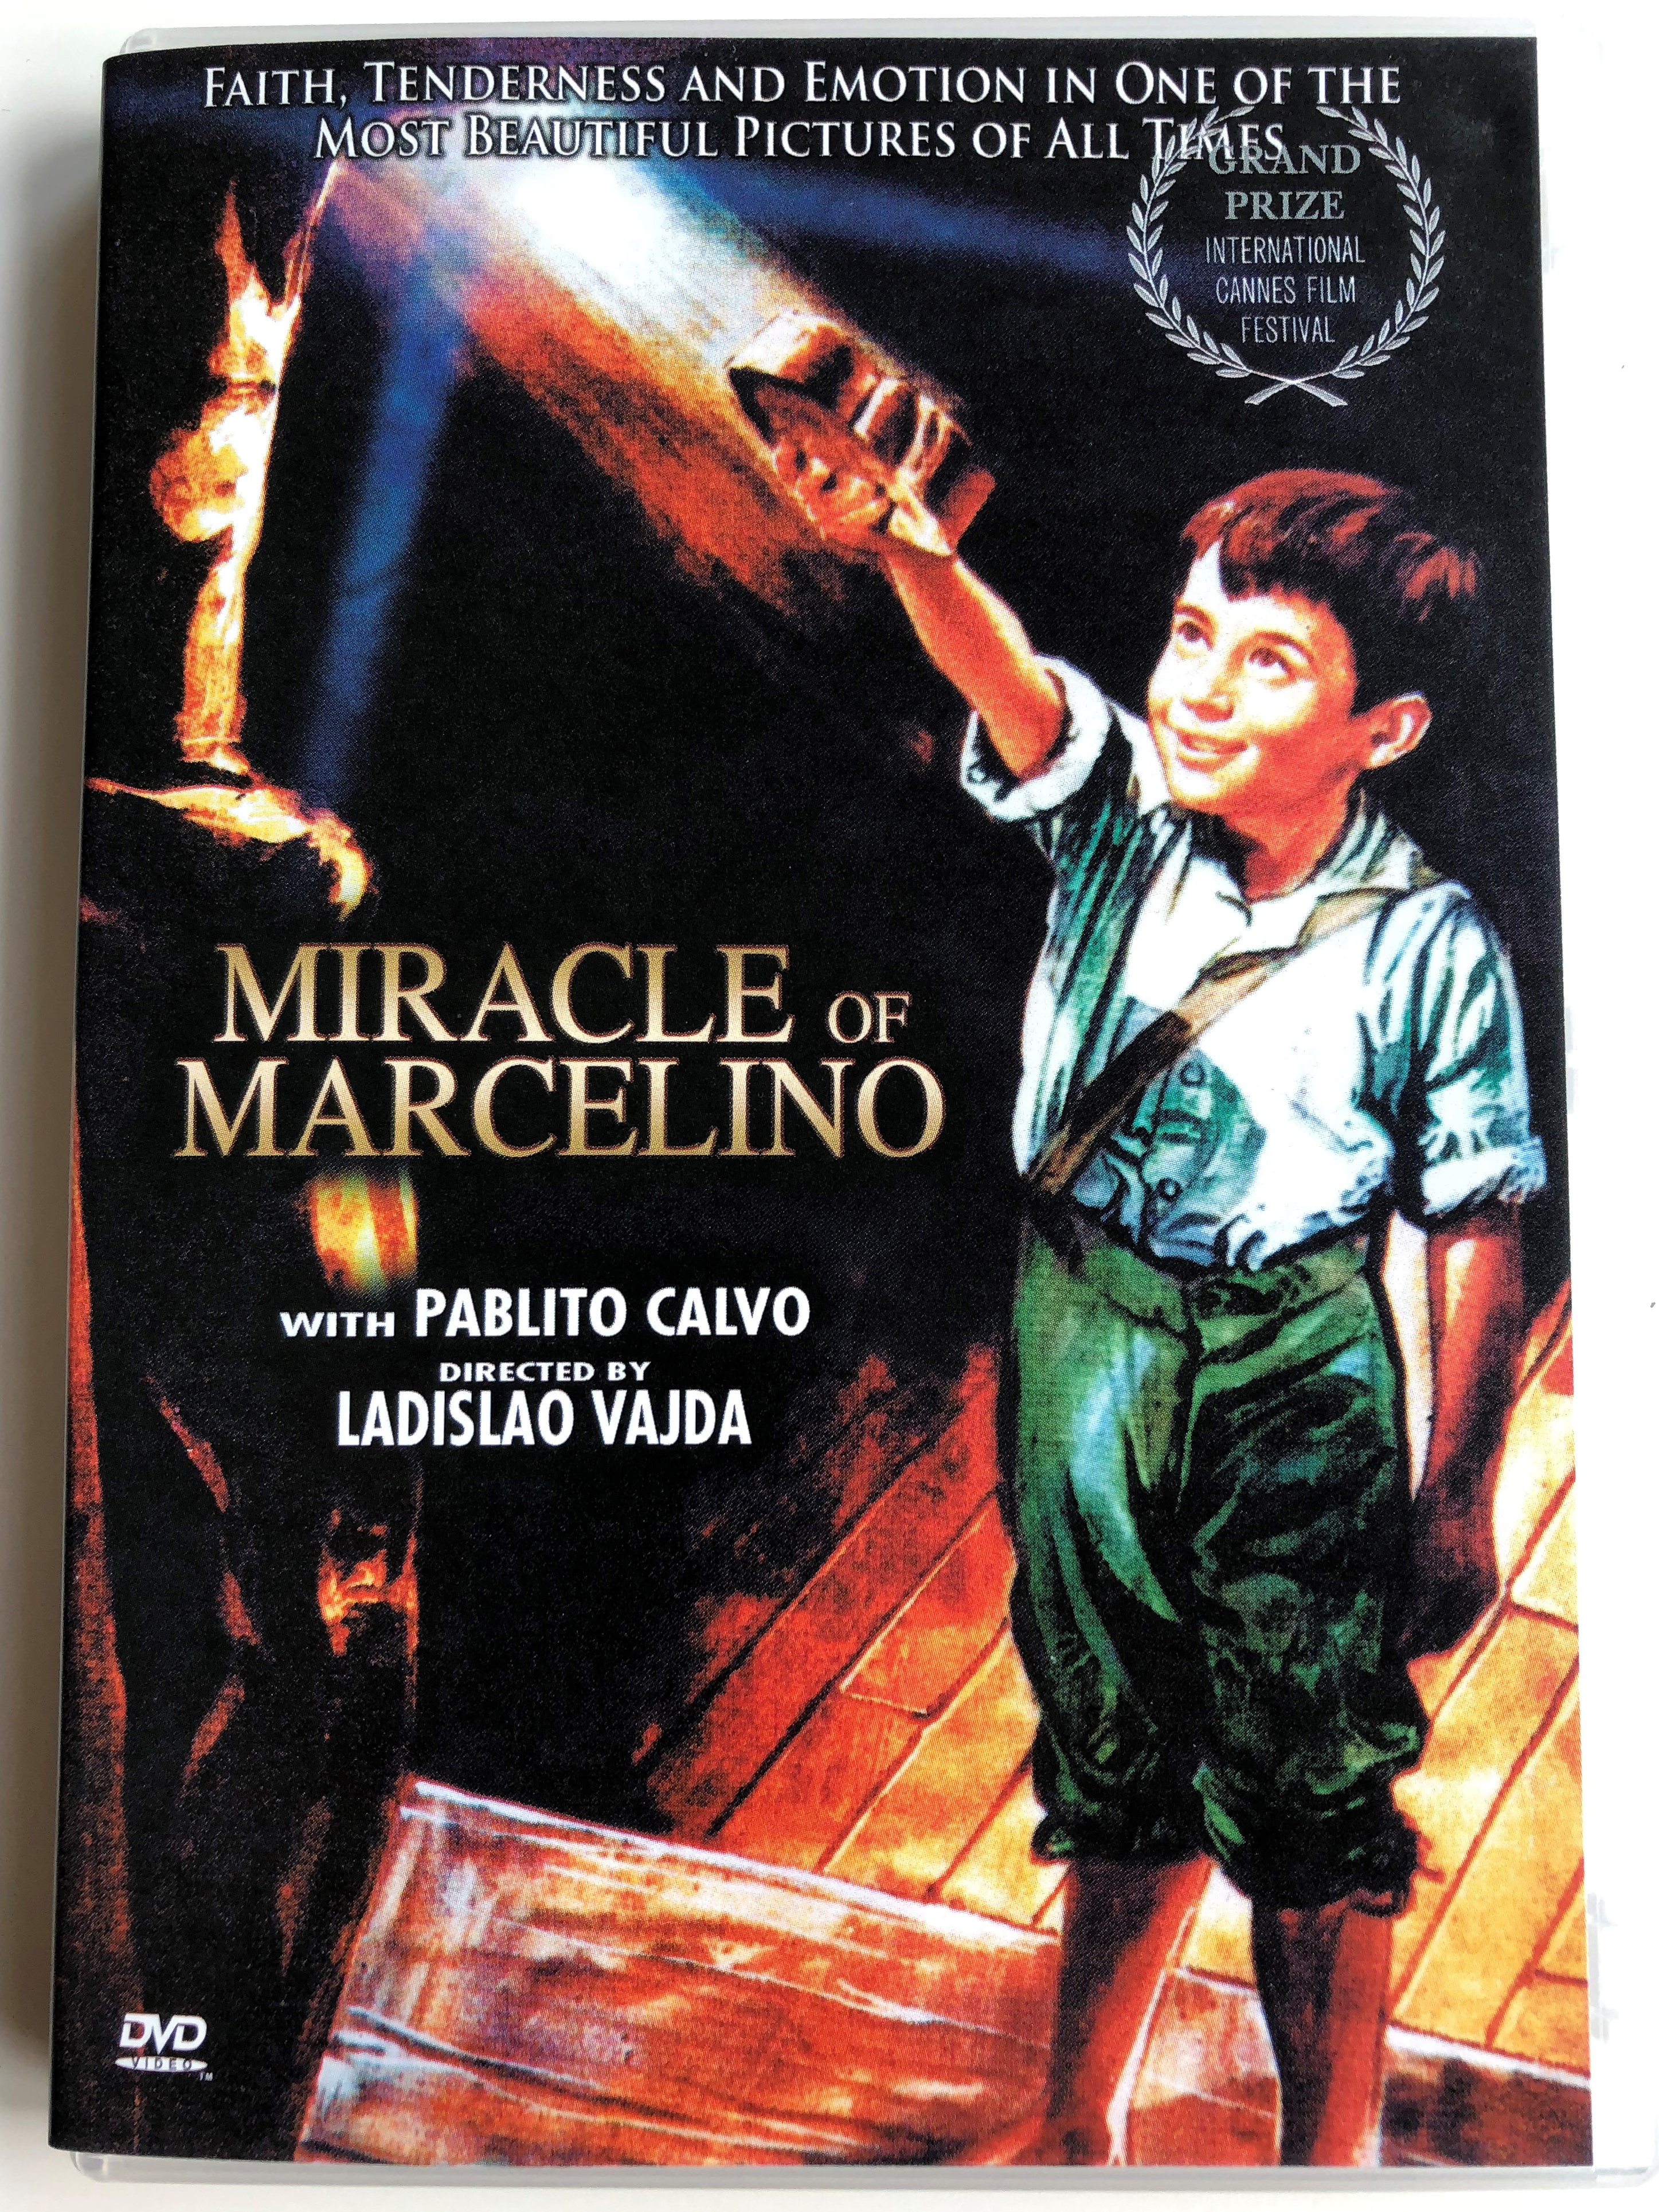 Miracle of Marcelino DVD 1955 / Directed by Ladislao Vajda / Starring:  Pablito Calvo, Rafael Rivelles, Antonio Vico, Juan Calvo / Grand Prize  award winner at International Cannes Film Festival / VCI entertainment -  bibleinmylanguage